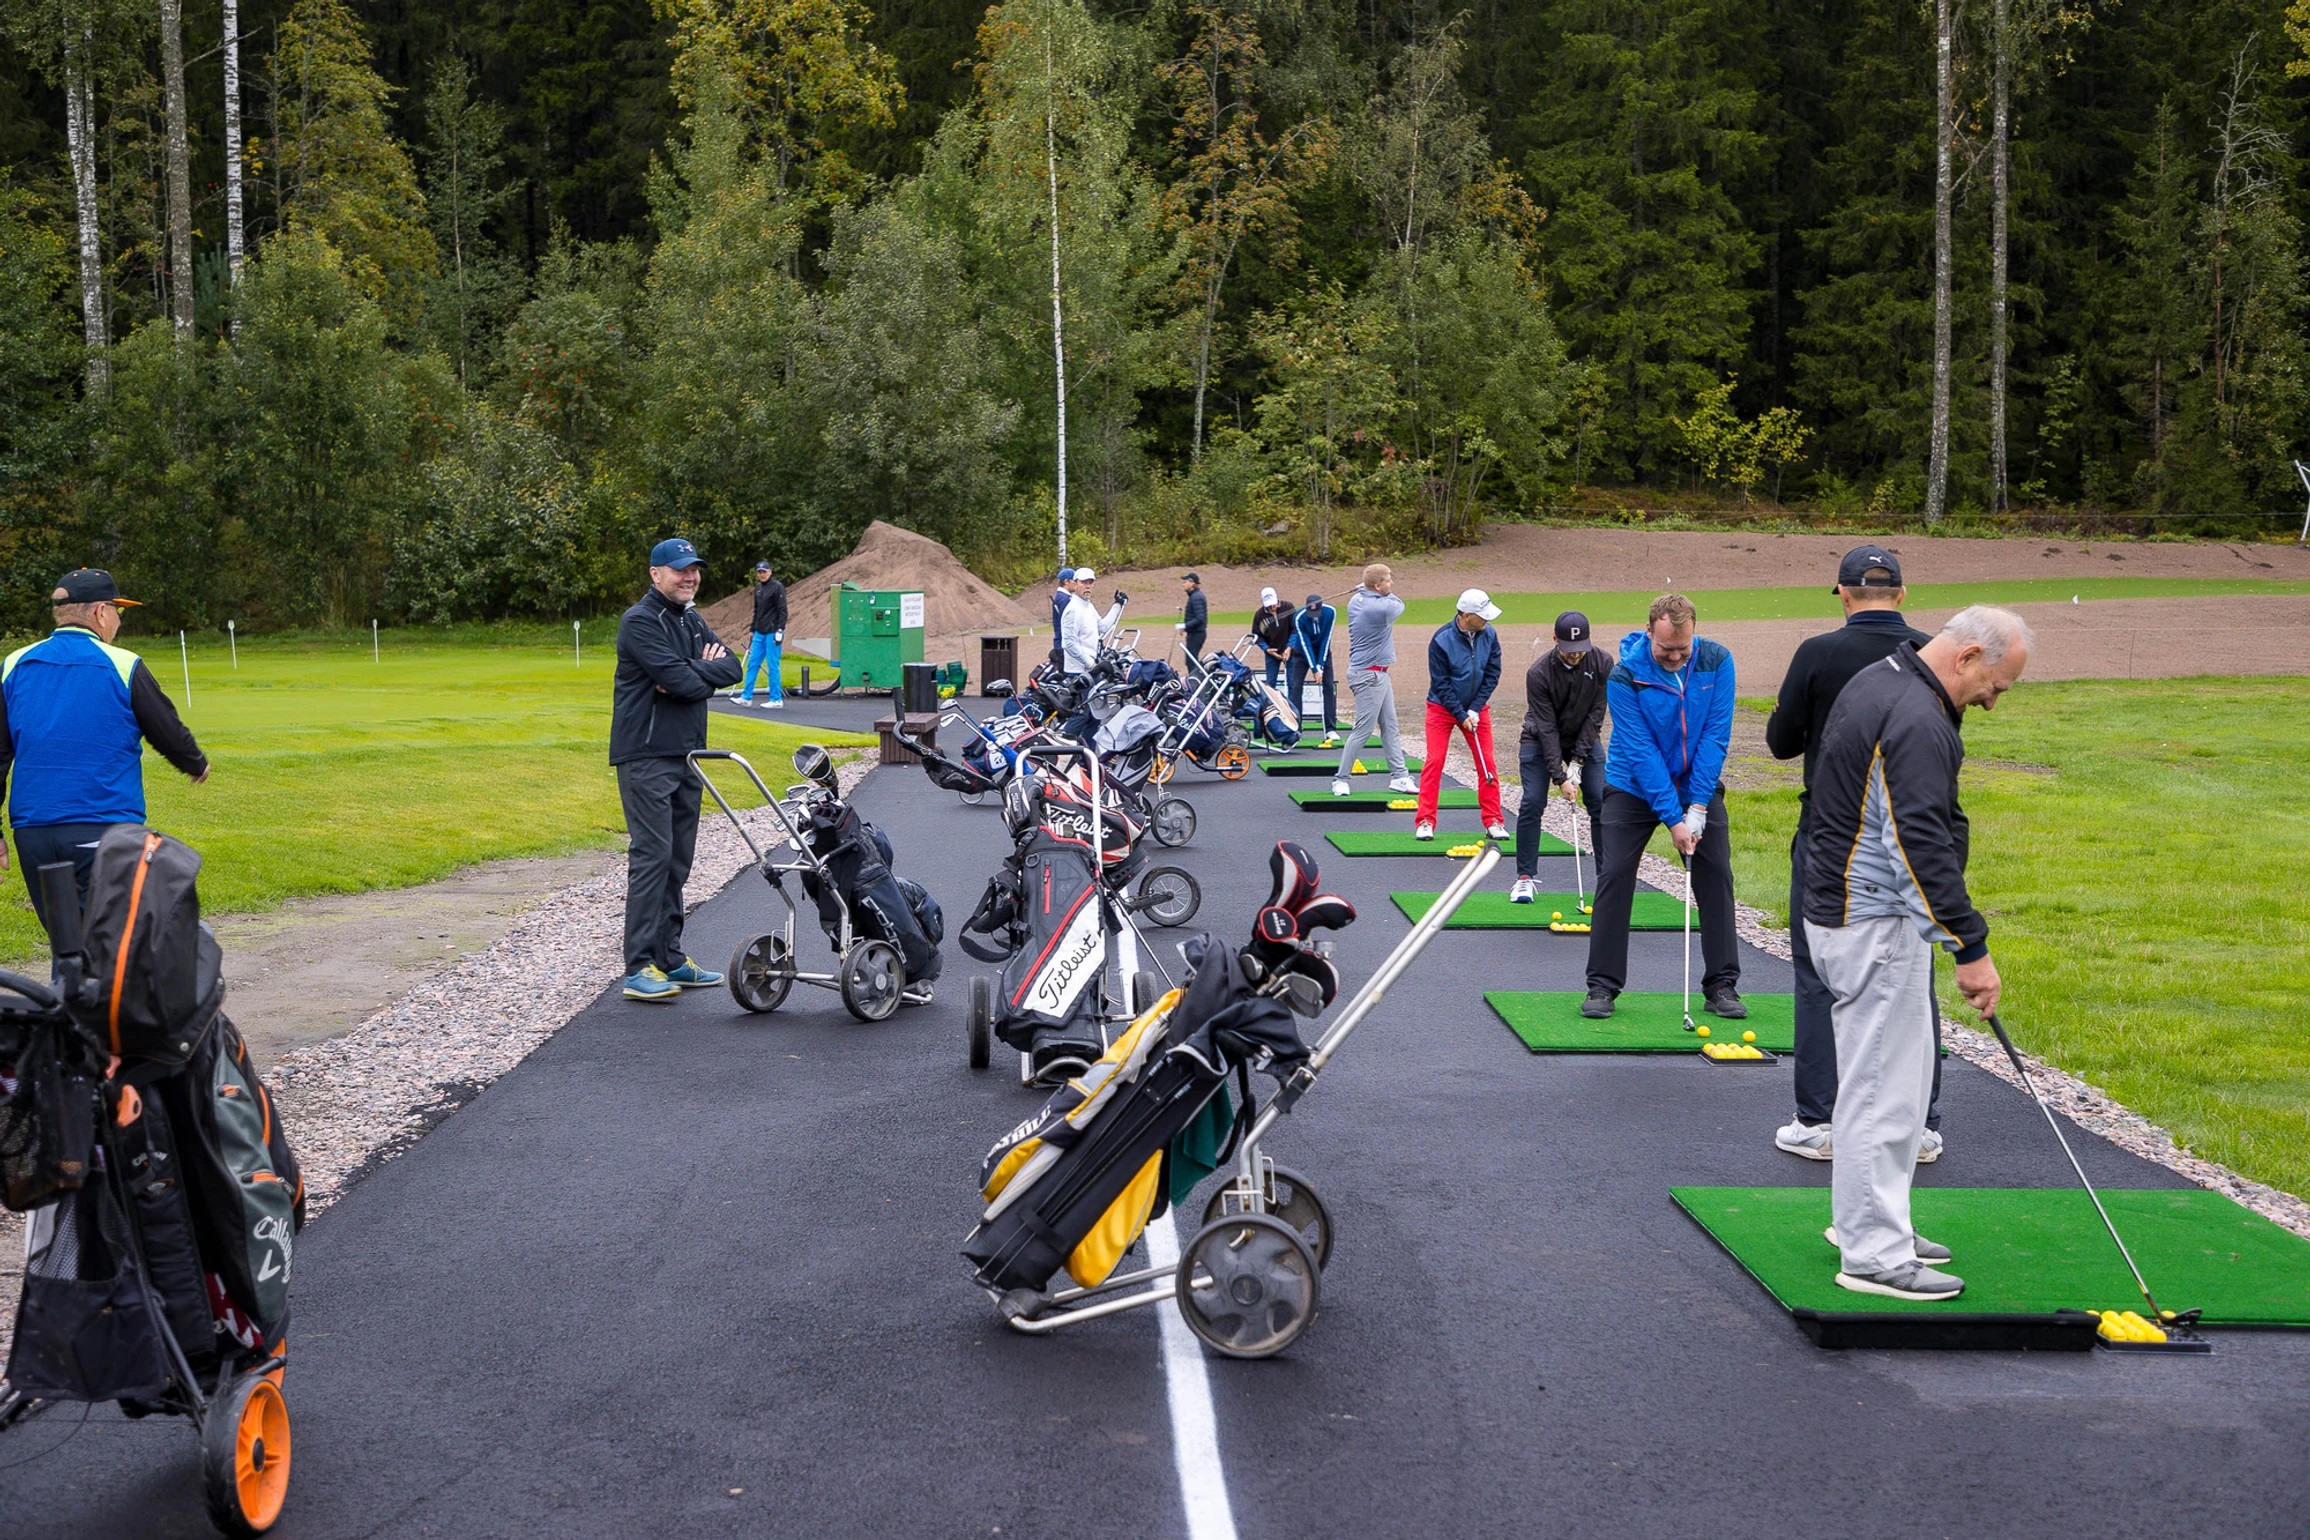 Featured image for “Tietotili Golf pelattiin 27.8.2021”